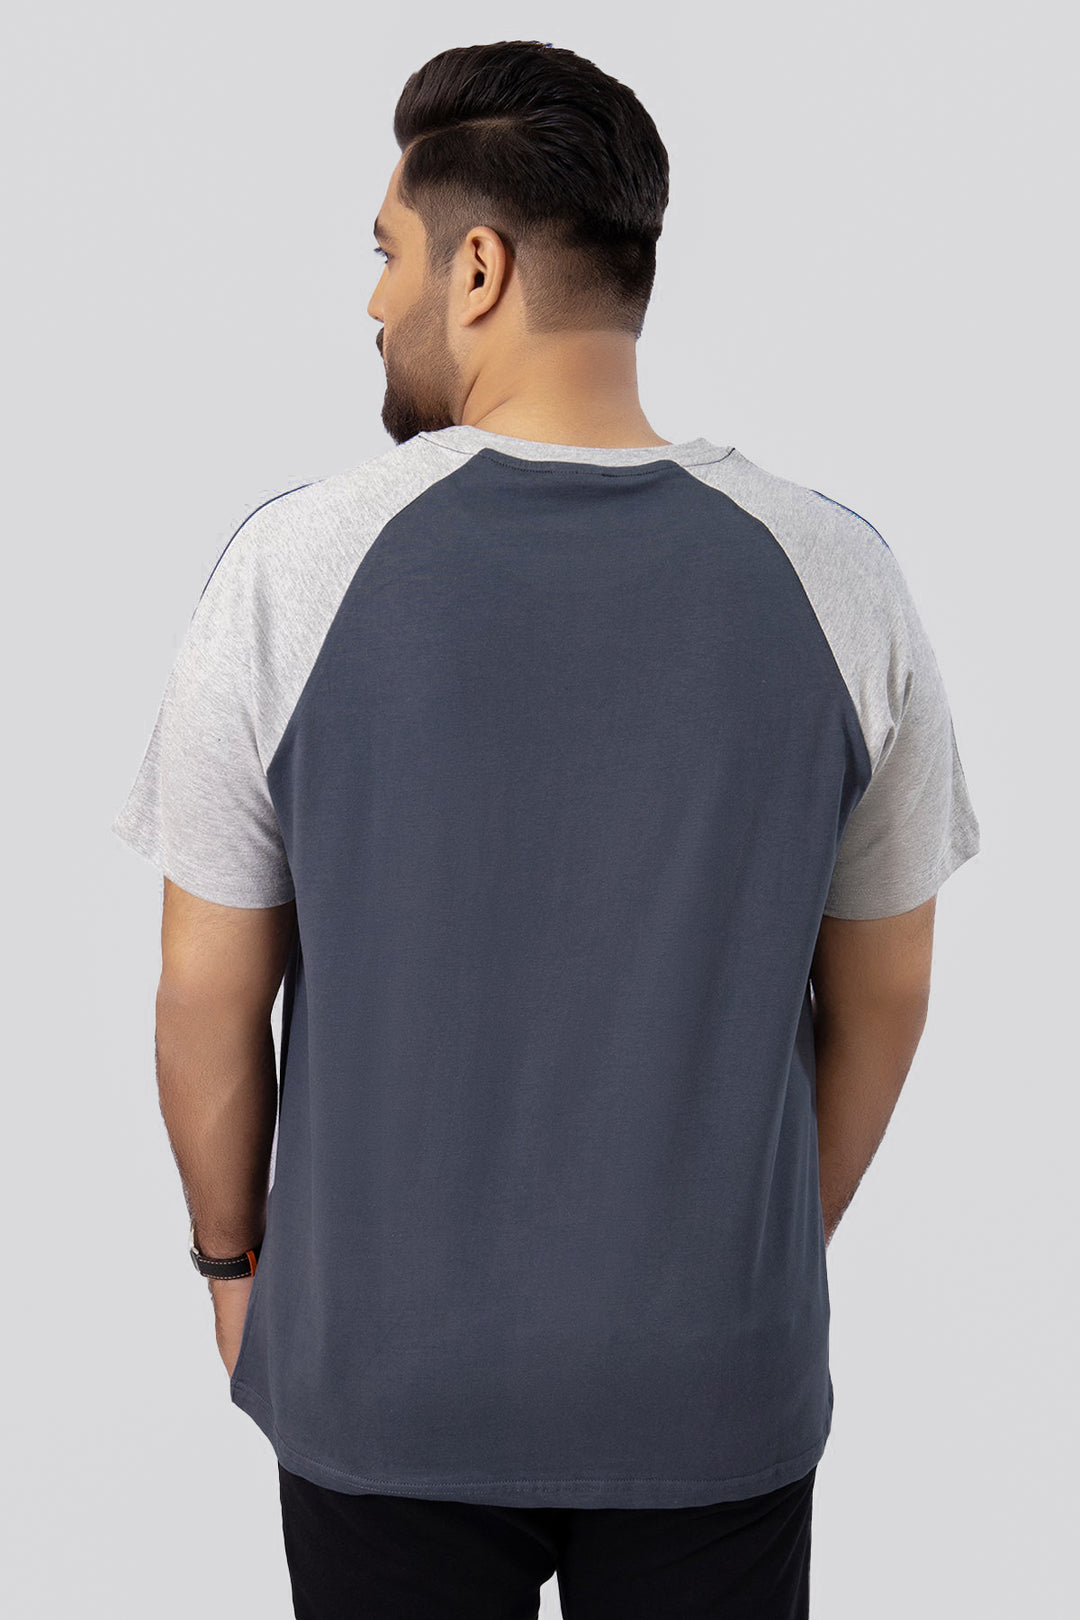 Dark Grey & Heather Grey Paneled Raglan T-Shirt (Plus Size) - A23 - MT0282P